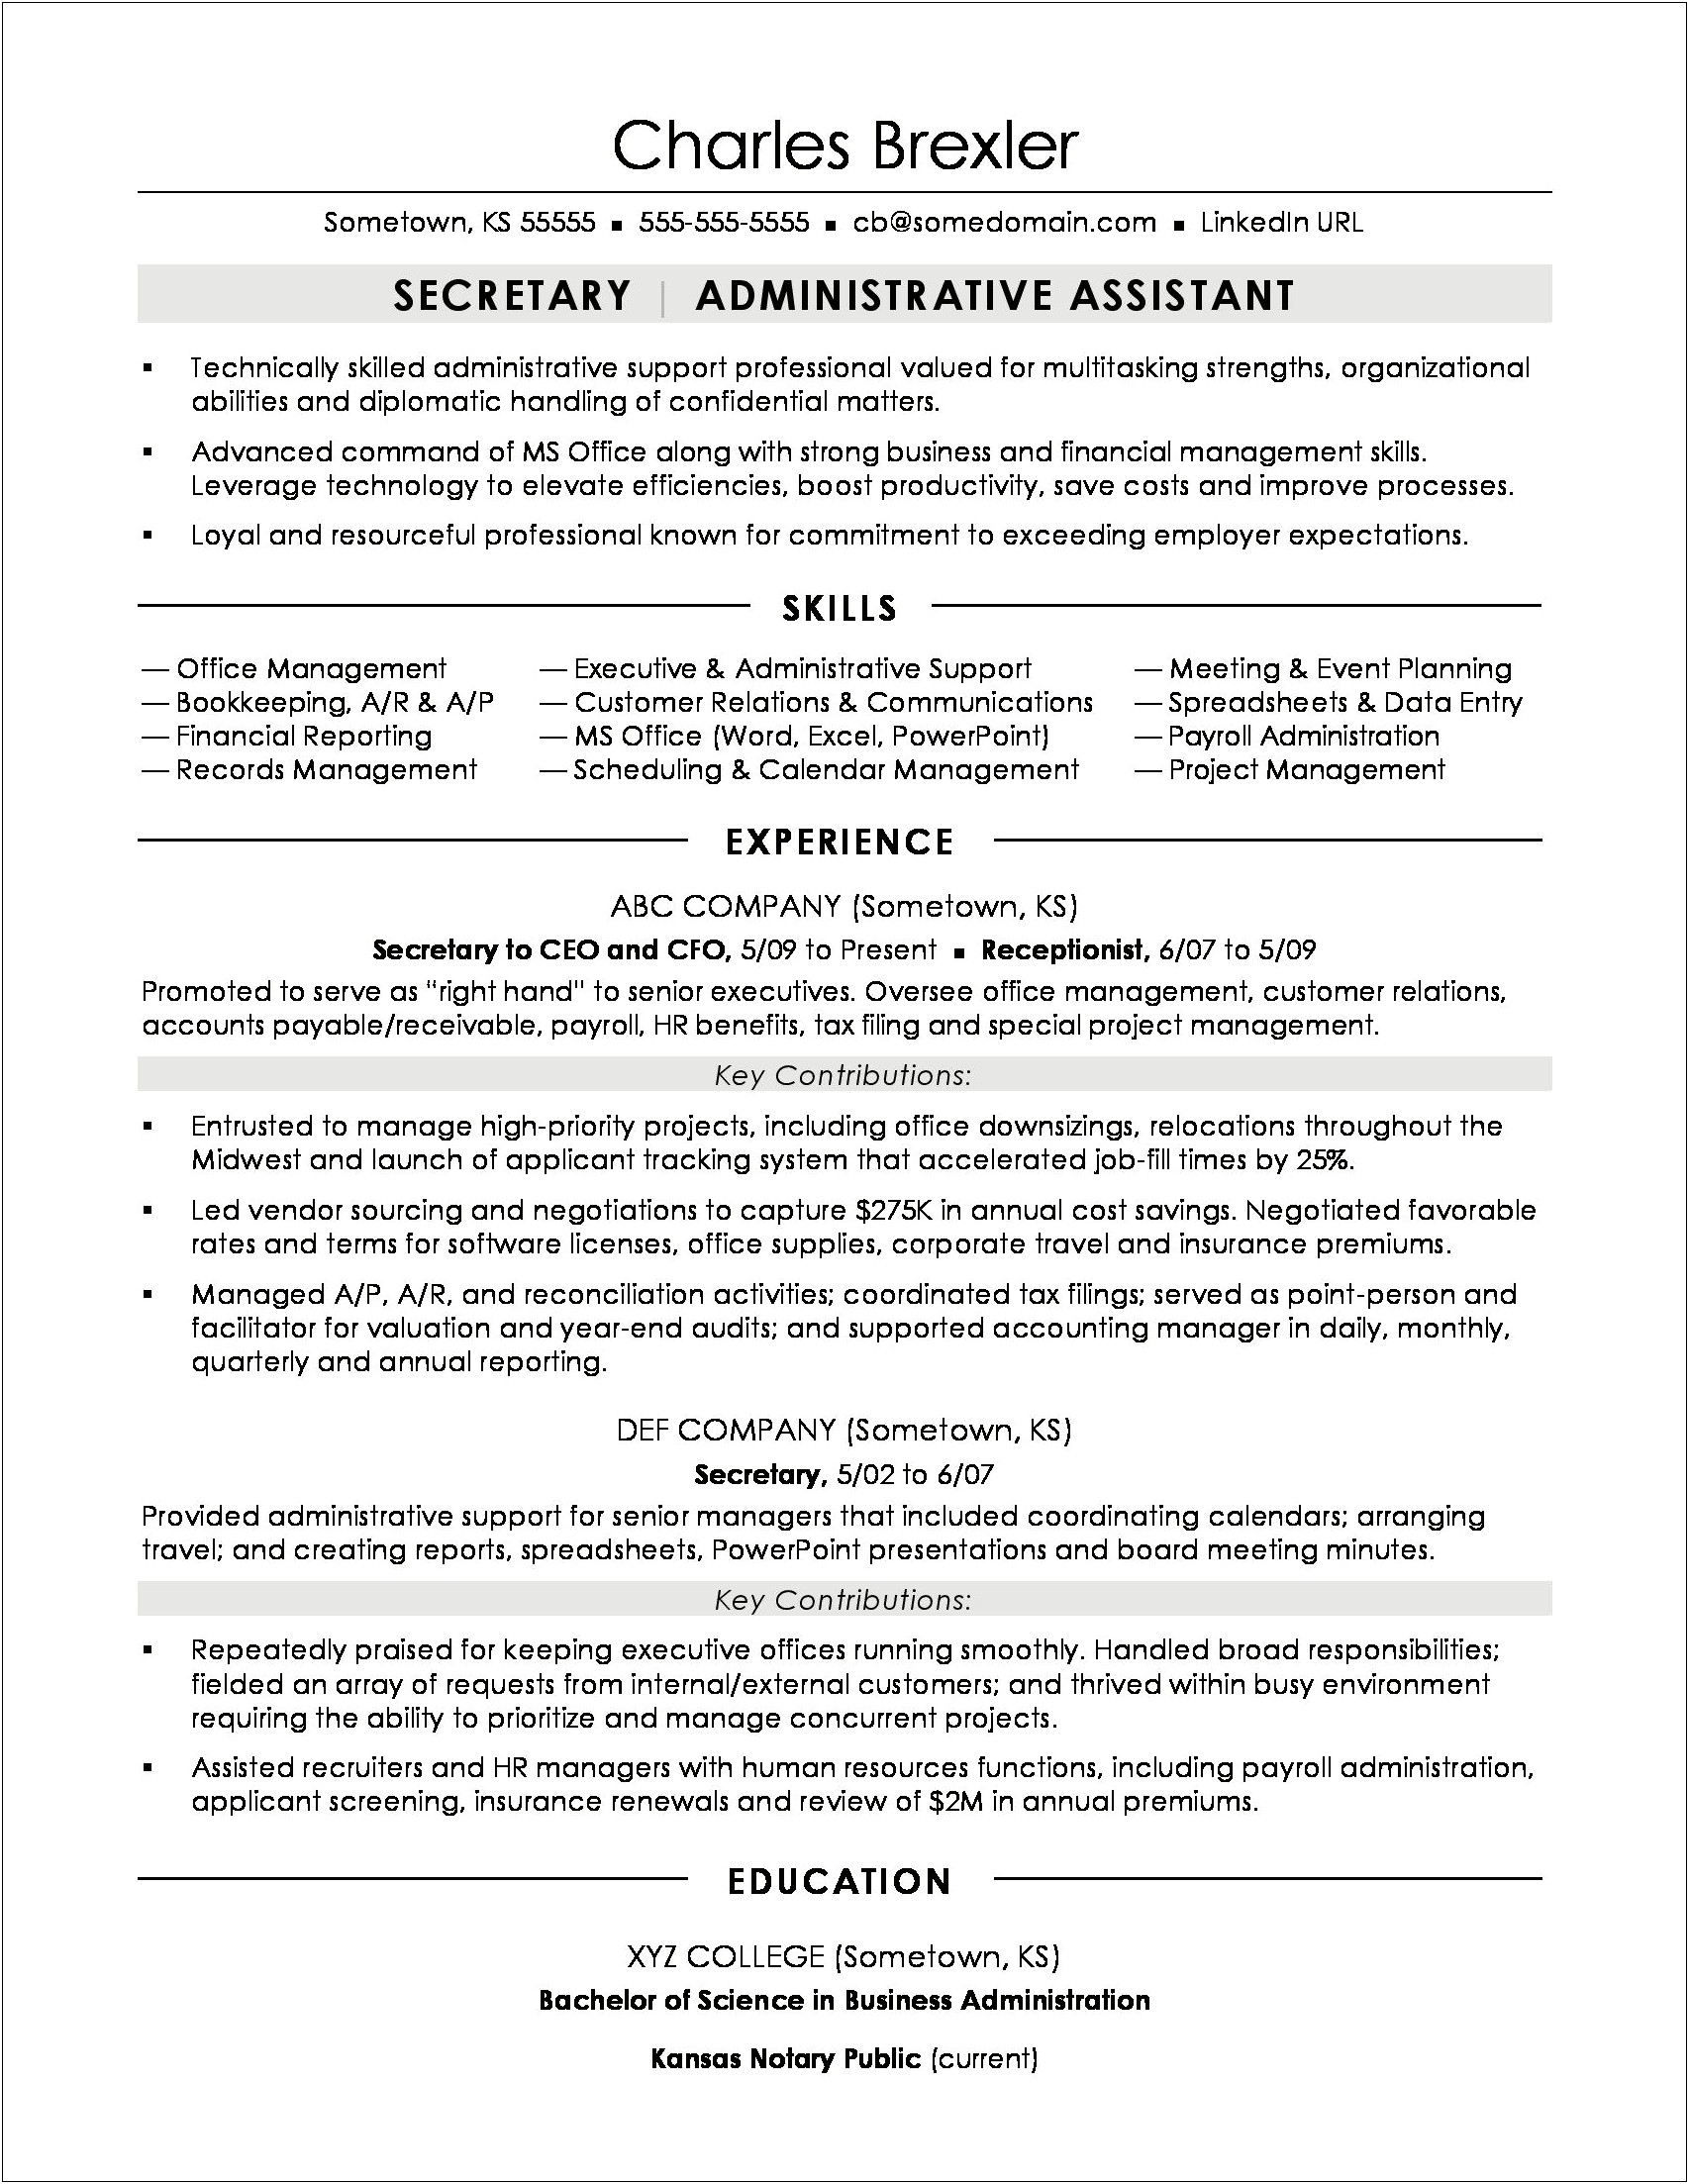 Skills Of Secretary On A Resume Description